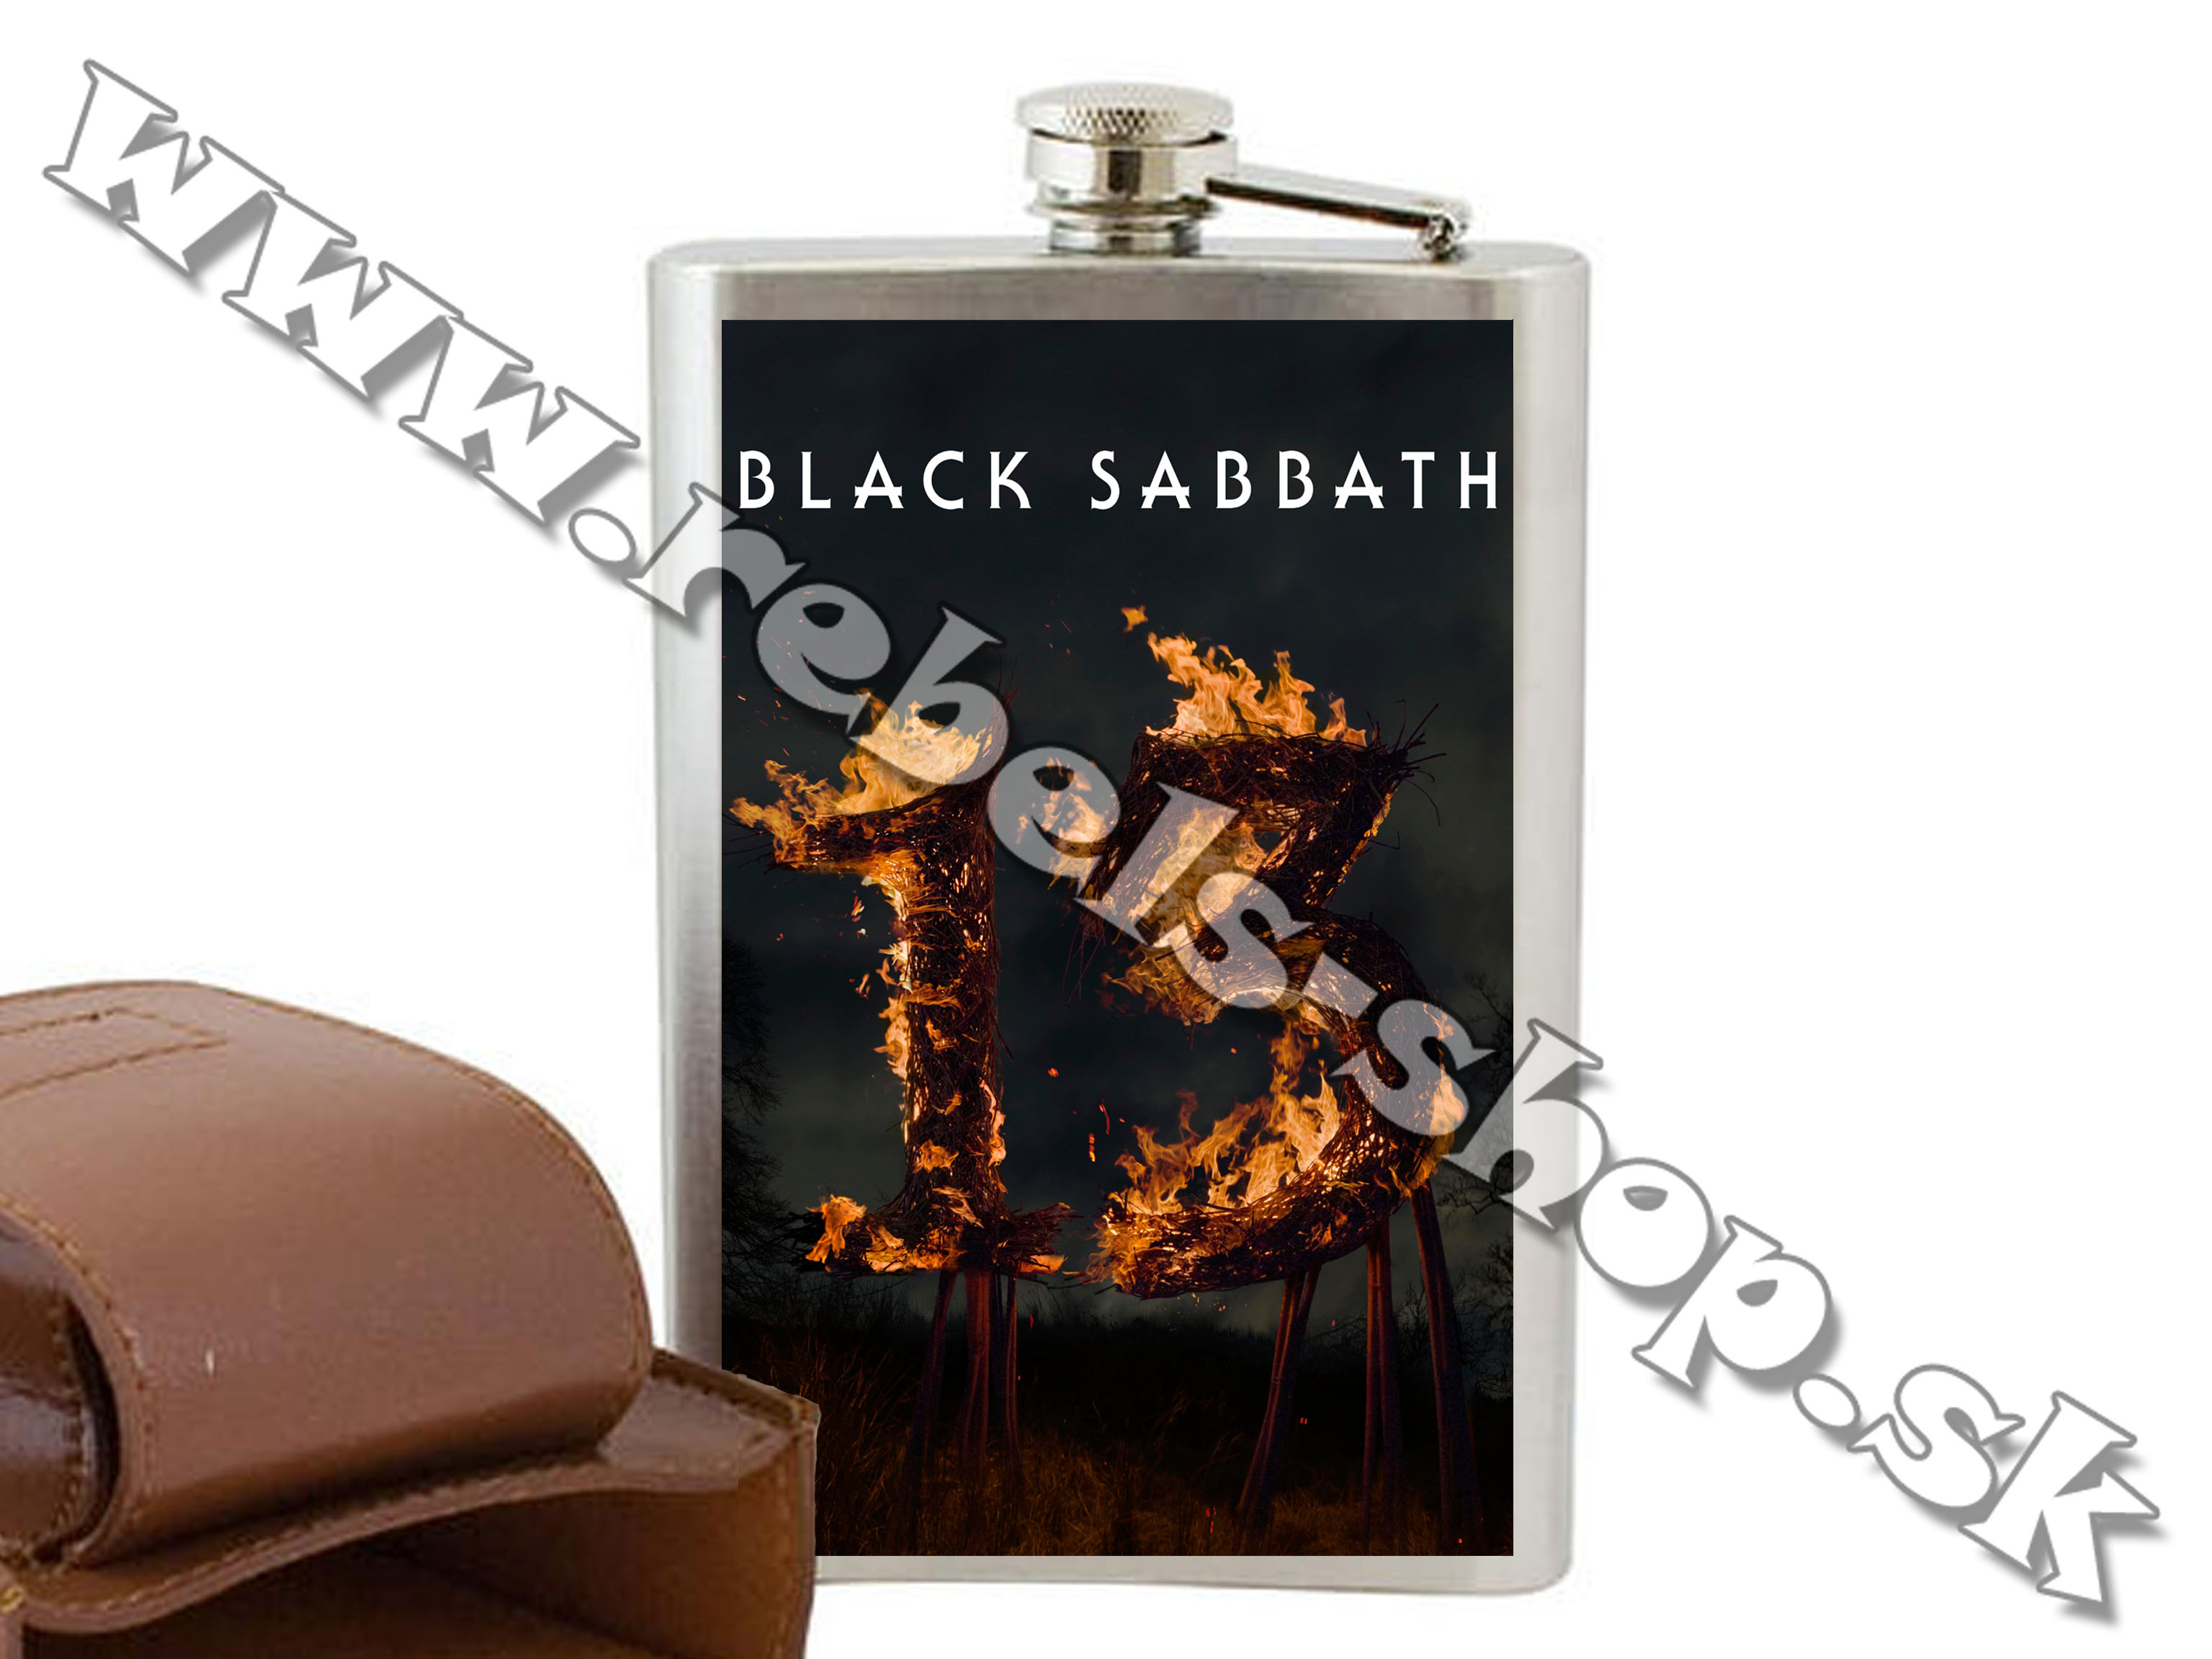 Ploskačka "Black Sabbath"